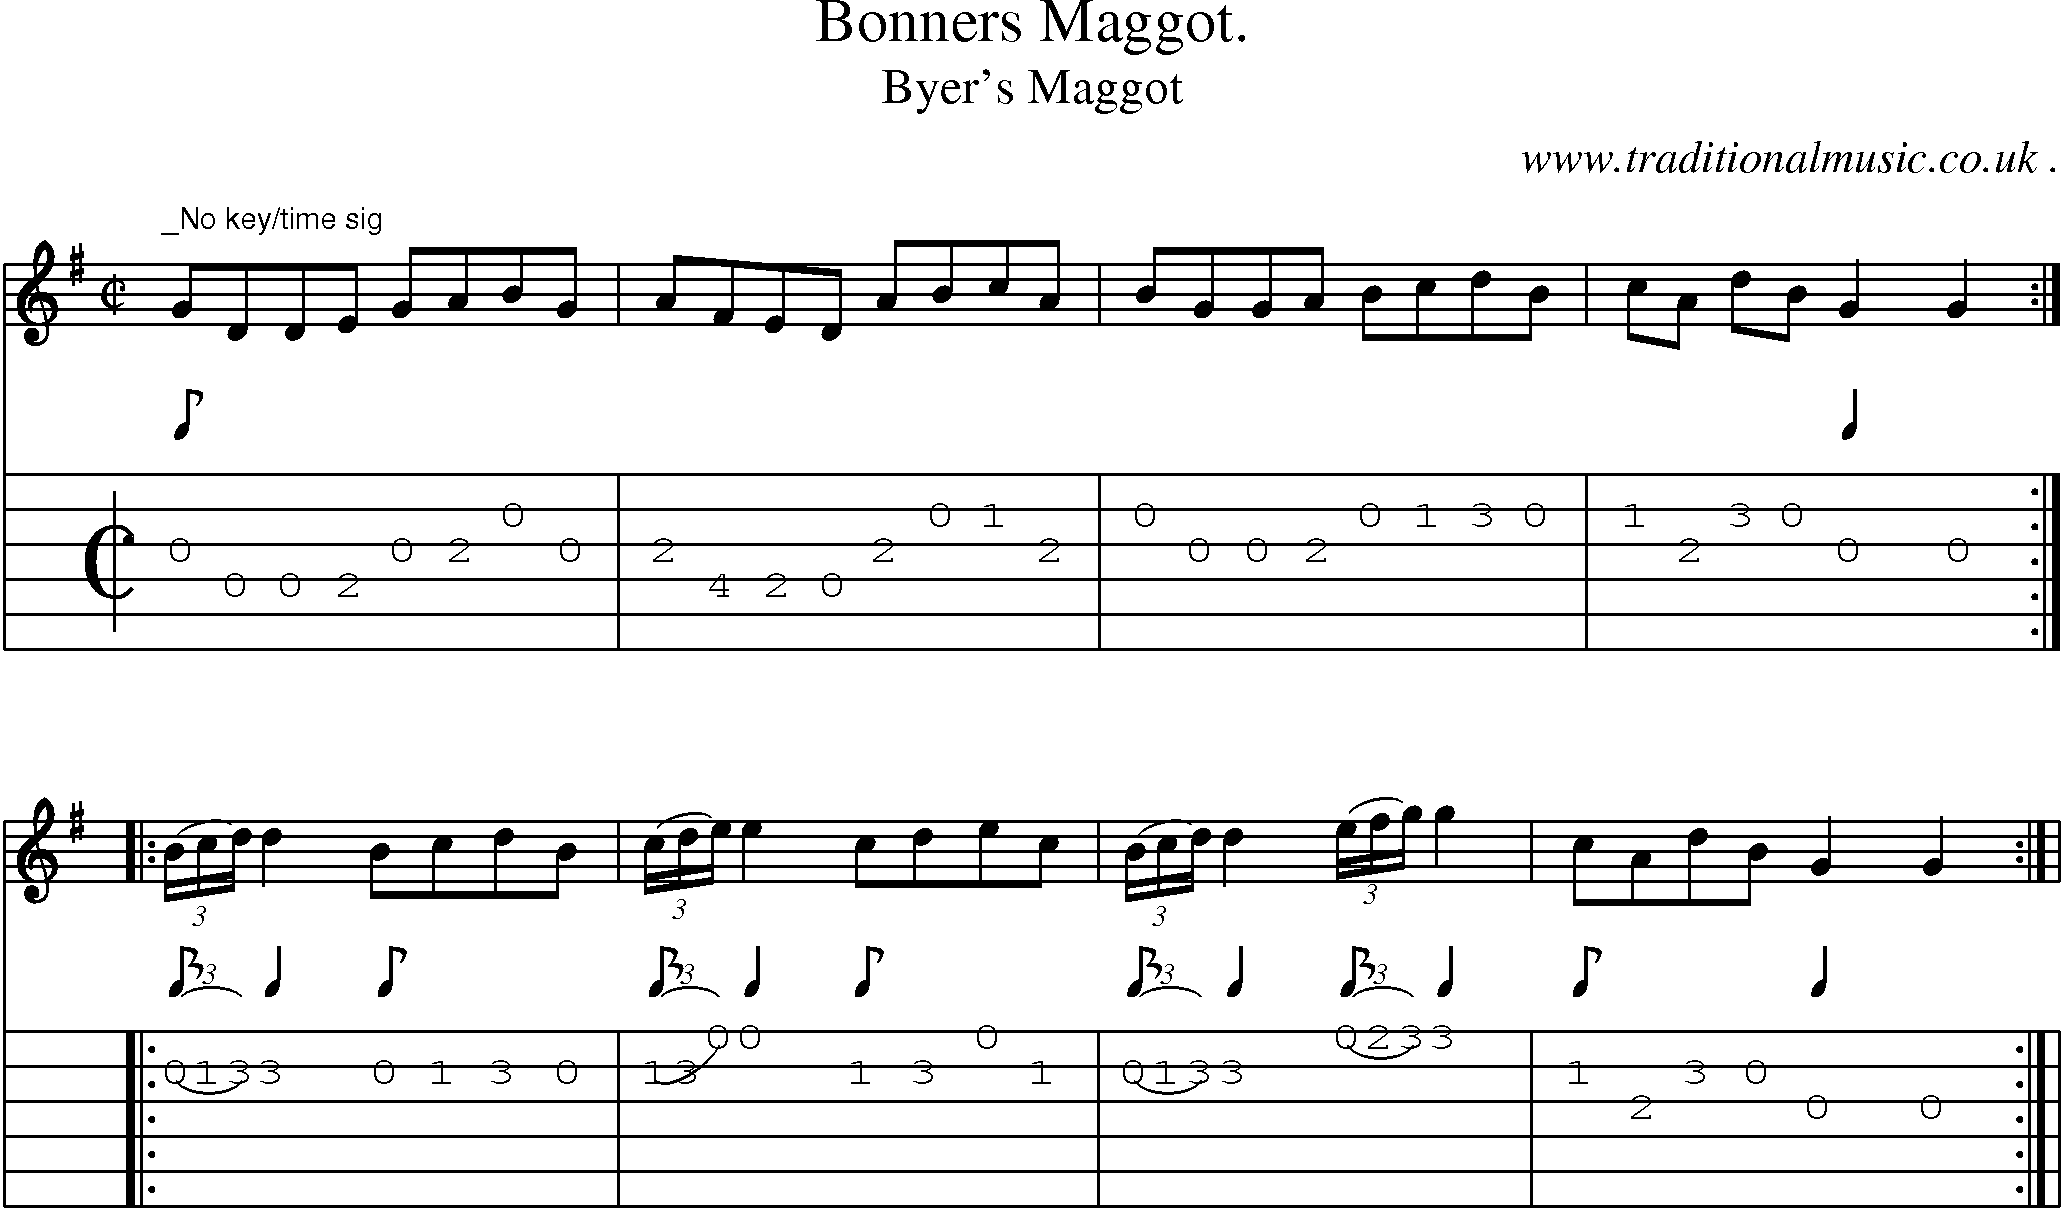 Sheet-Music and Guitar Tabs for Bonners Maggot